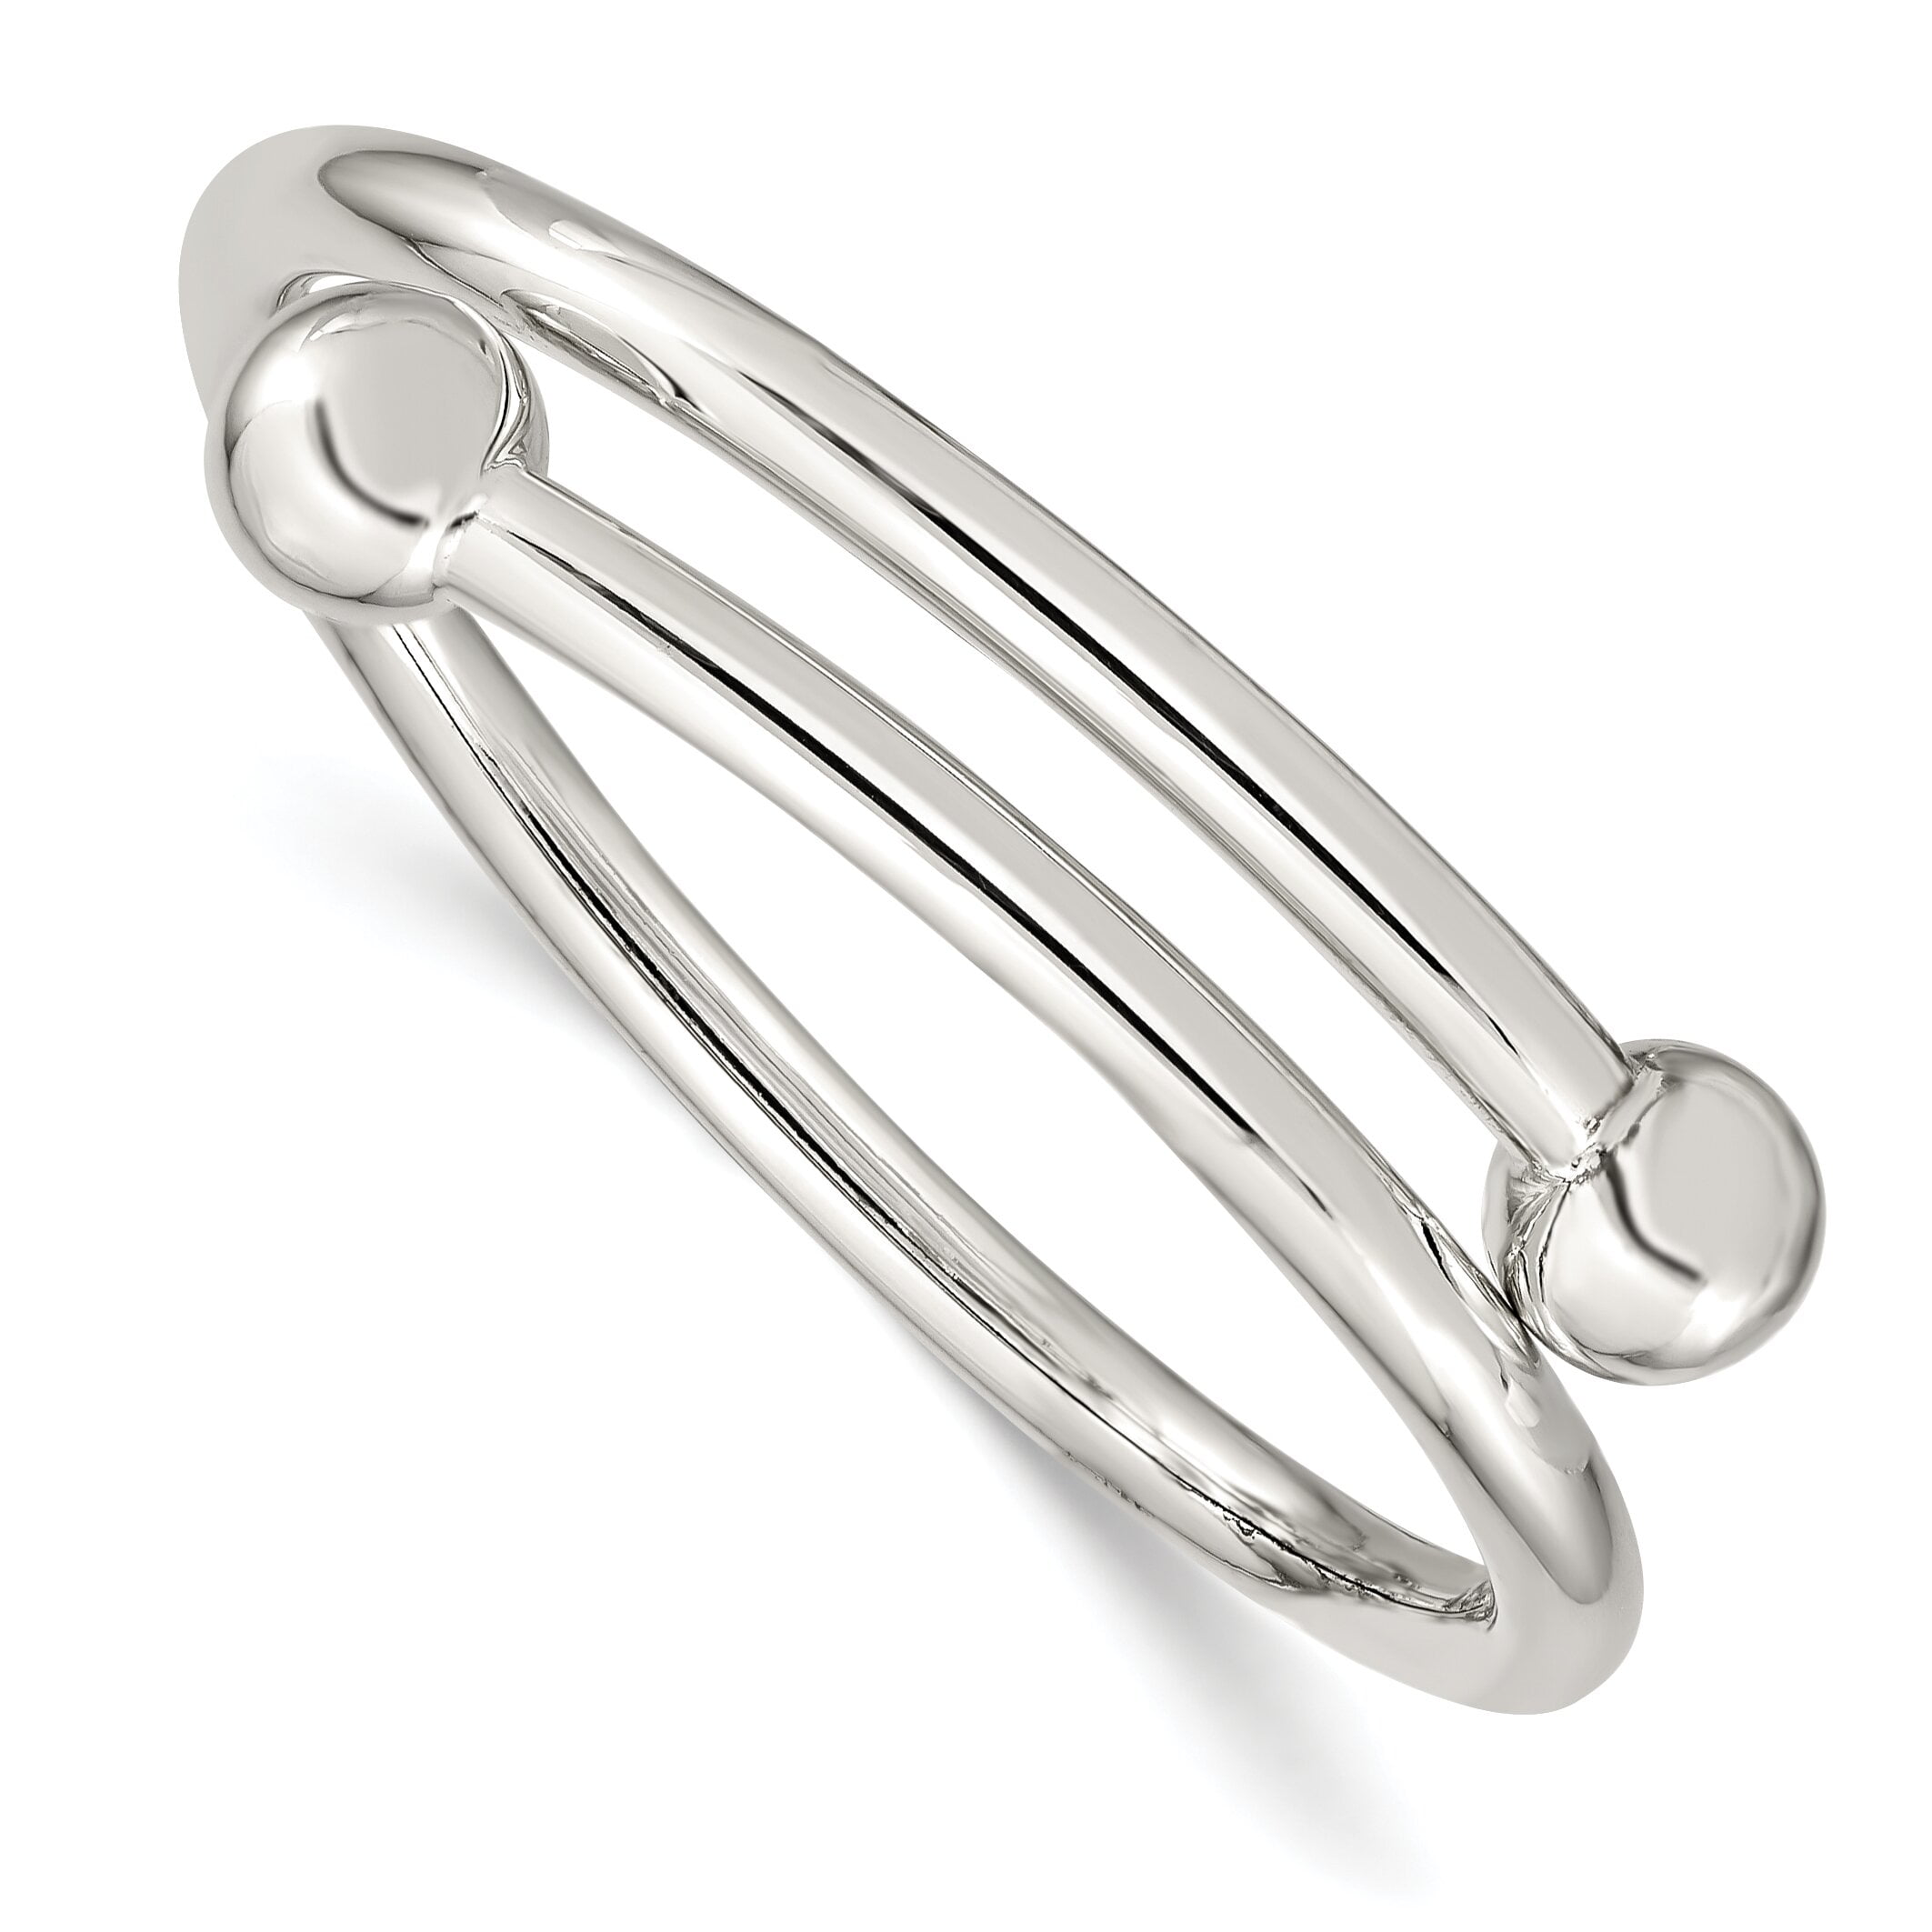 Shop LC 925 Sterling Silver Bracelets for Women Diamond Cut Bangles Cuff  Jewelry7.5